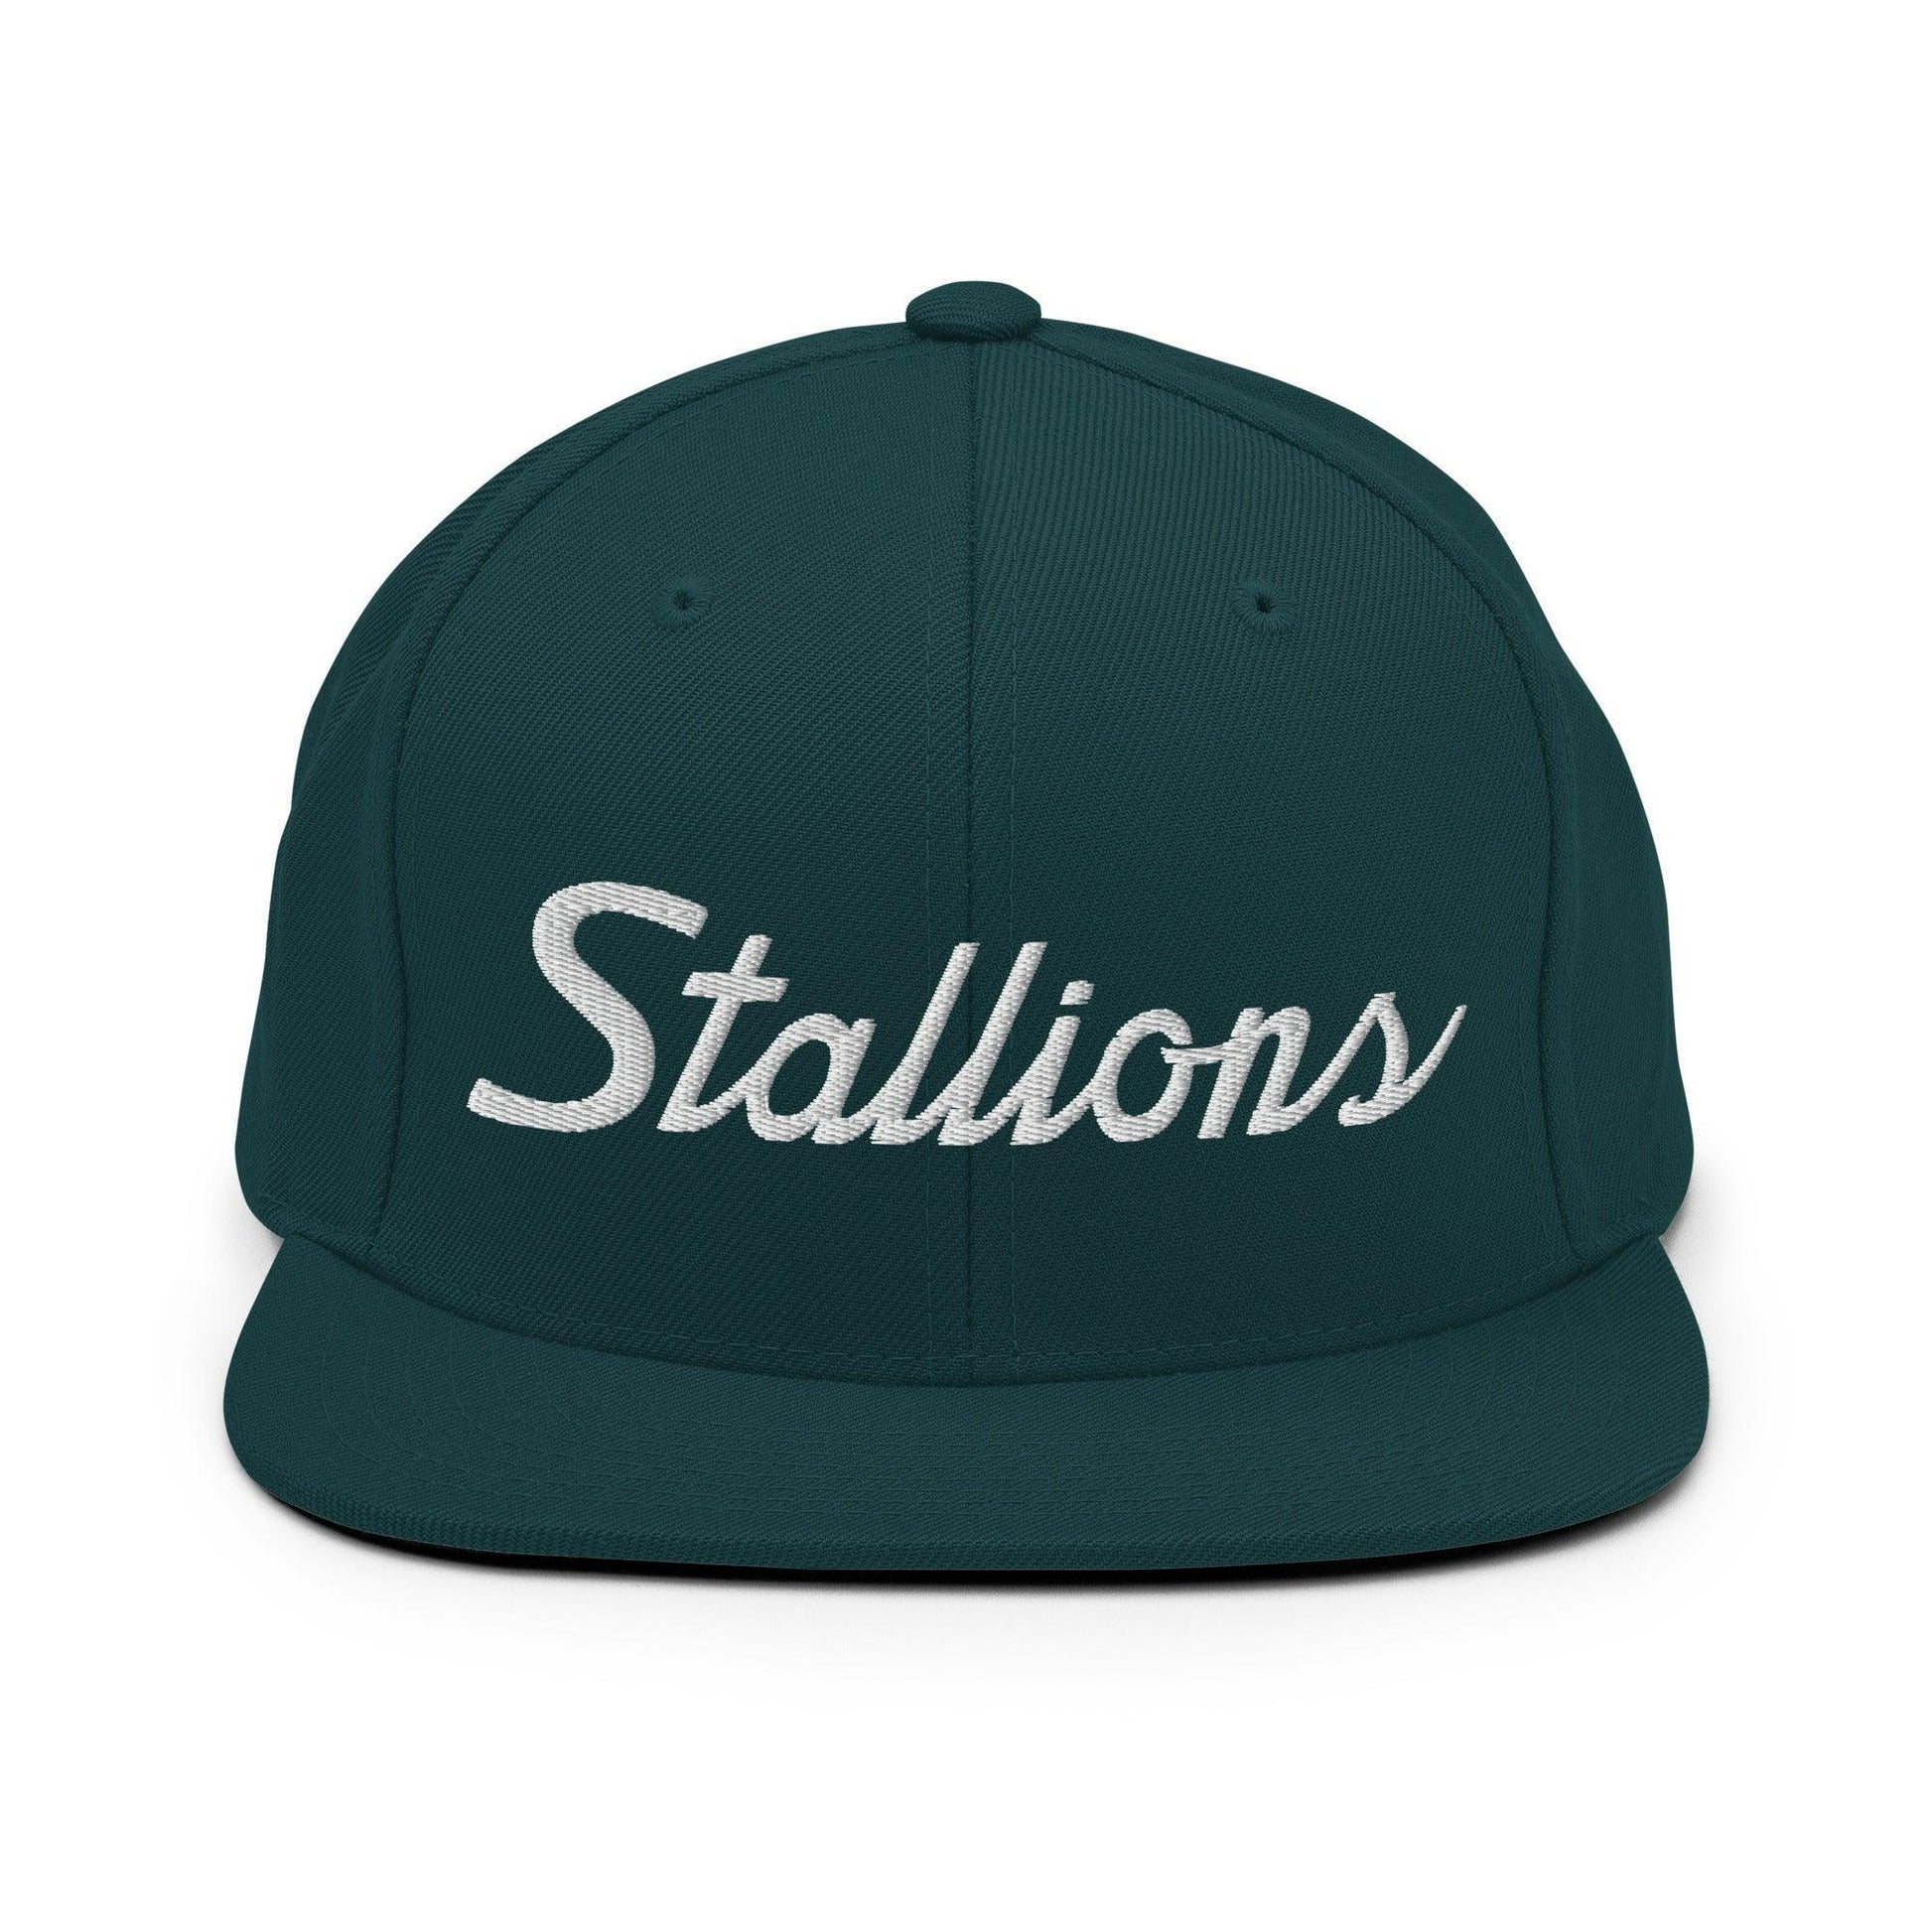 Stallions School Mascot Script Snapback Hat Spruce